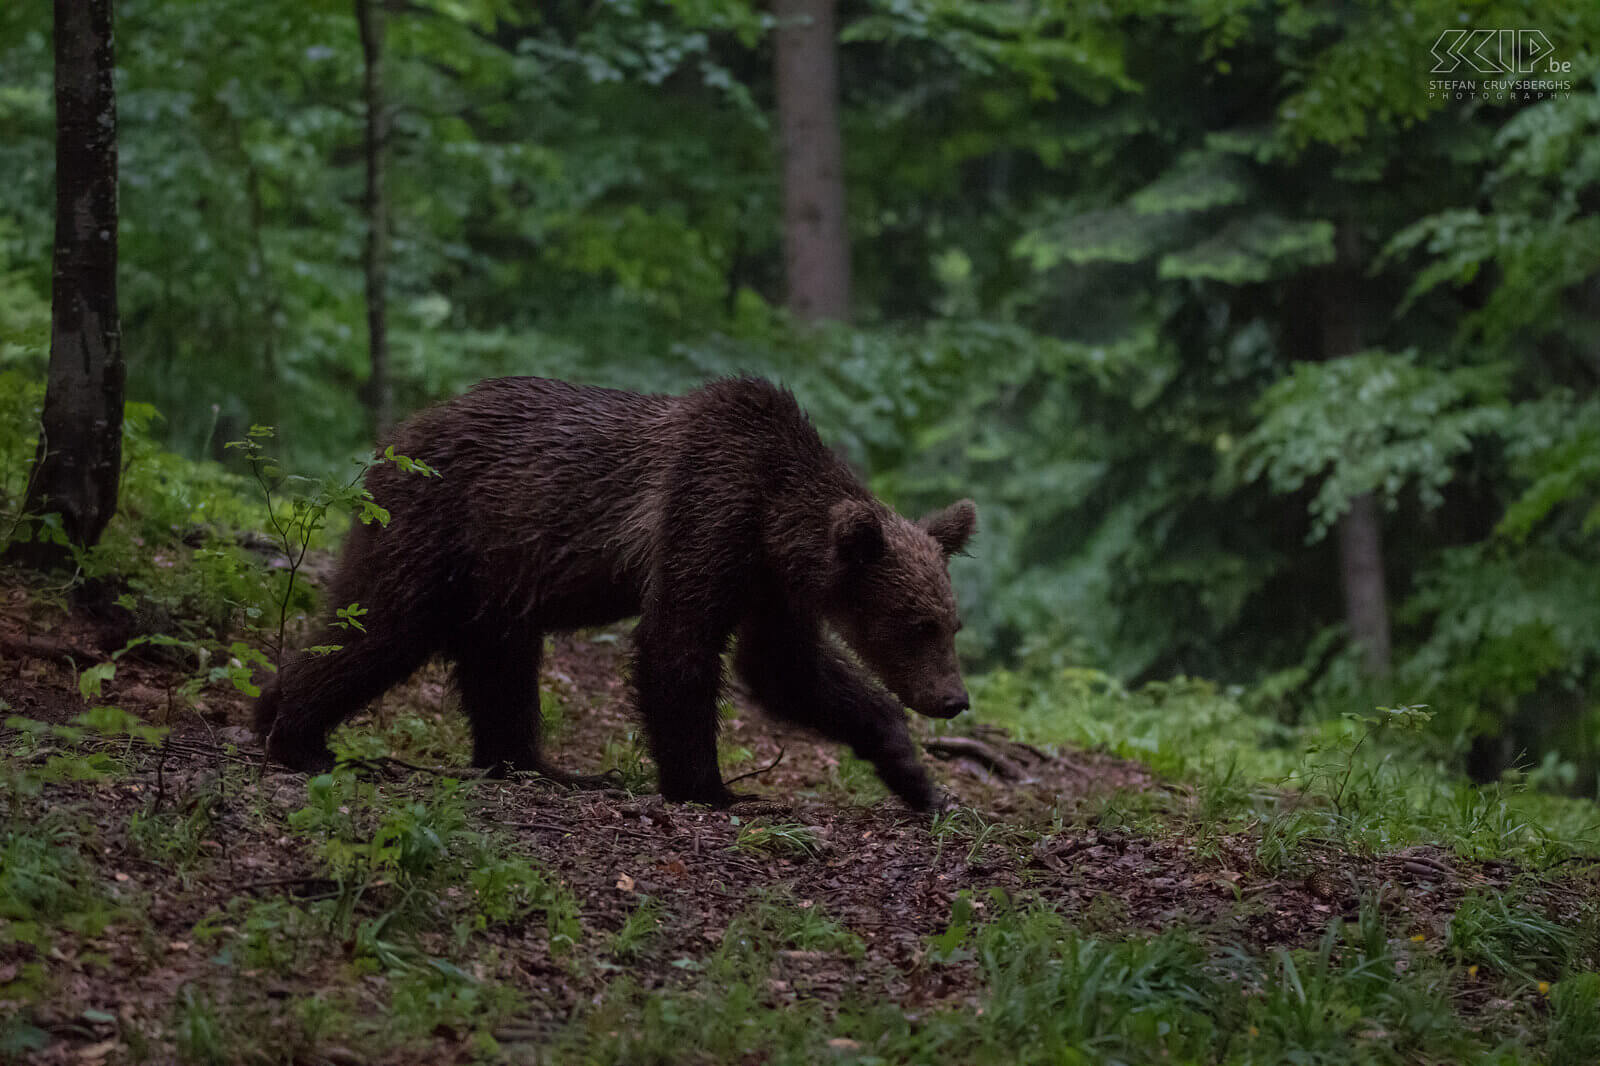 Notranjska - Juvenile brown bear  Stefan Cruysberghs